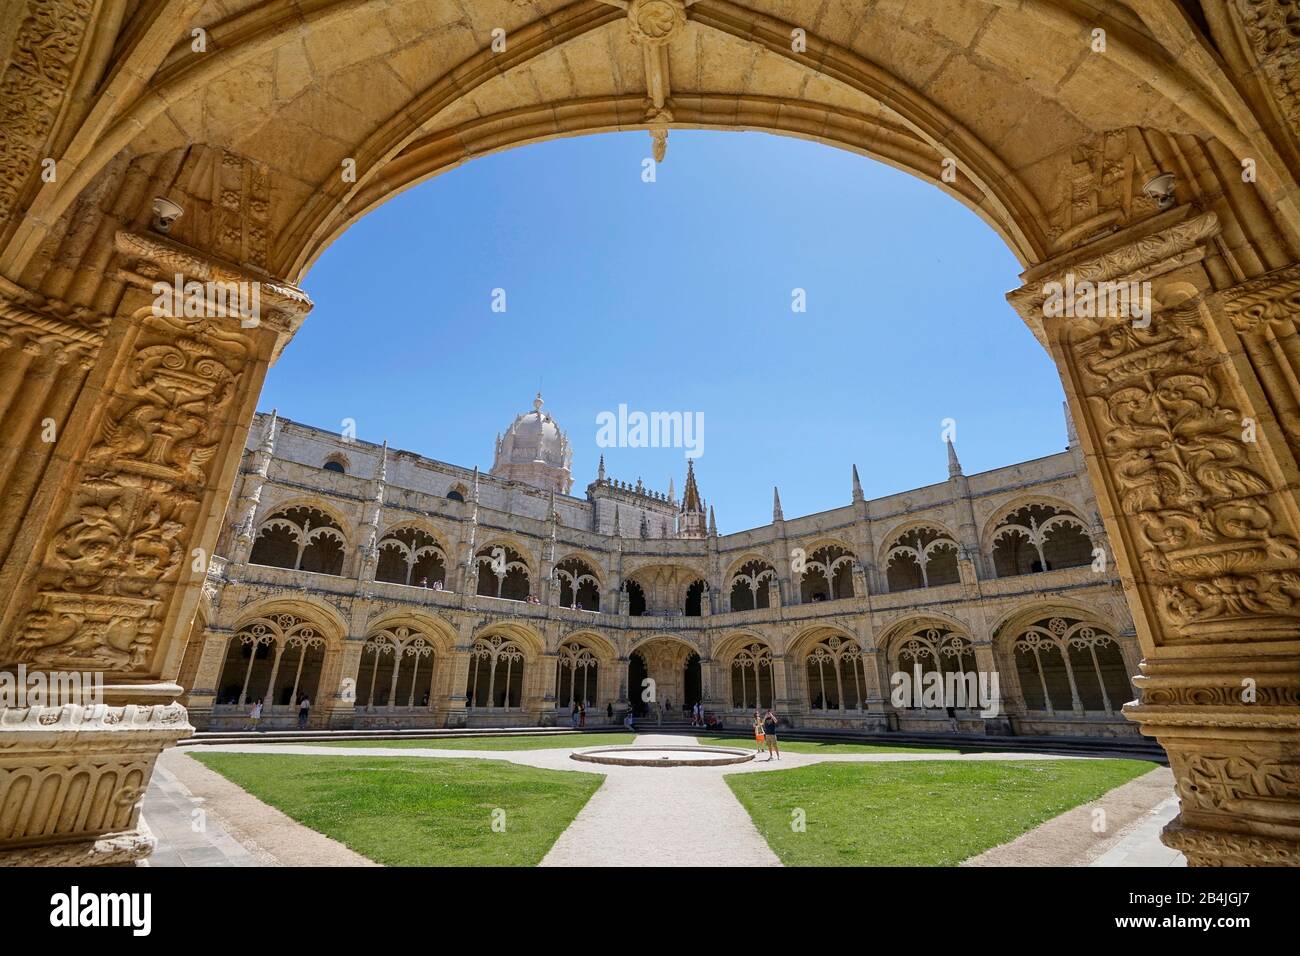 Europe, Portugal, Lisbon region, Lisbon, Jeronimos Monastery, courtyard, cloister, archway Stock Photo